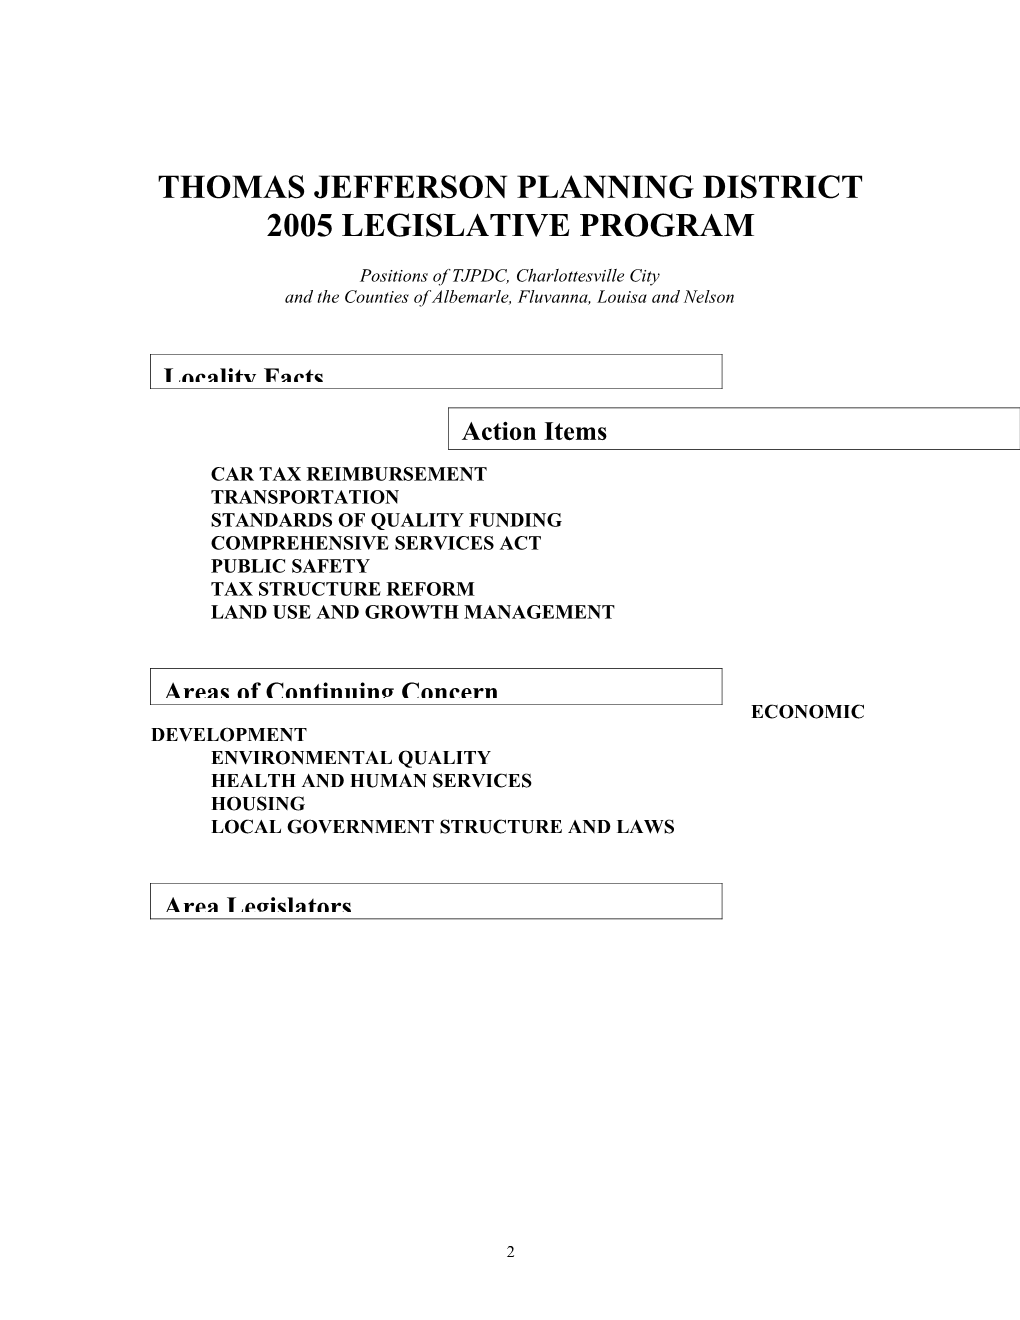 Thomas Jefferson Planning District Legislative Program